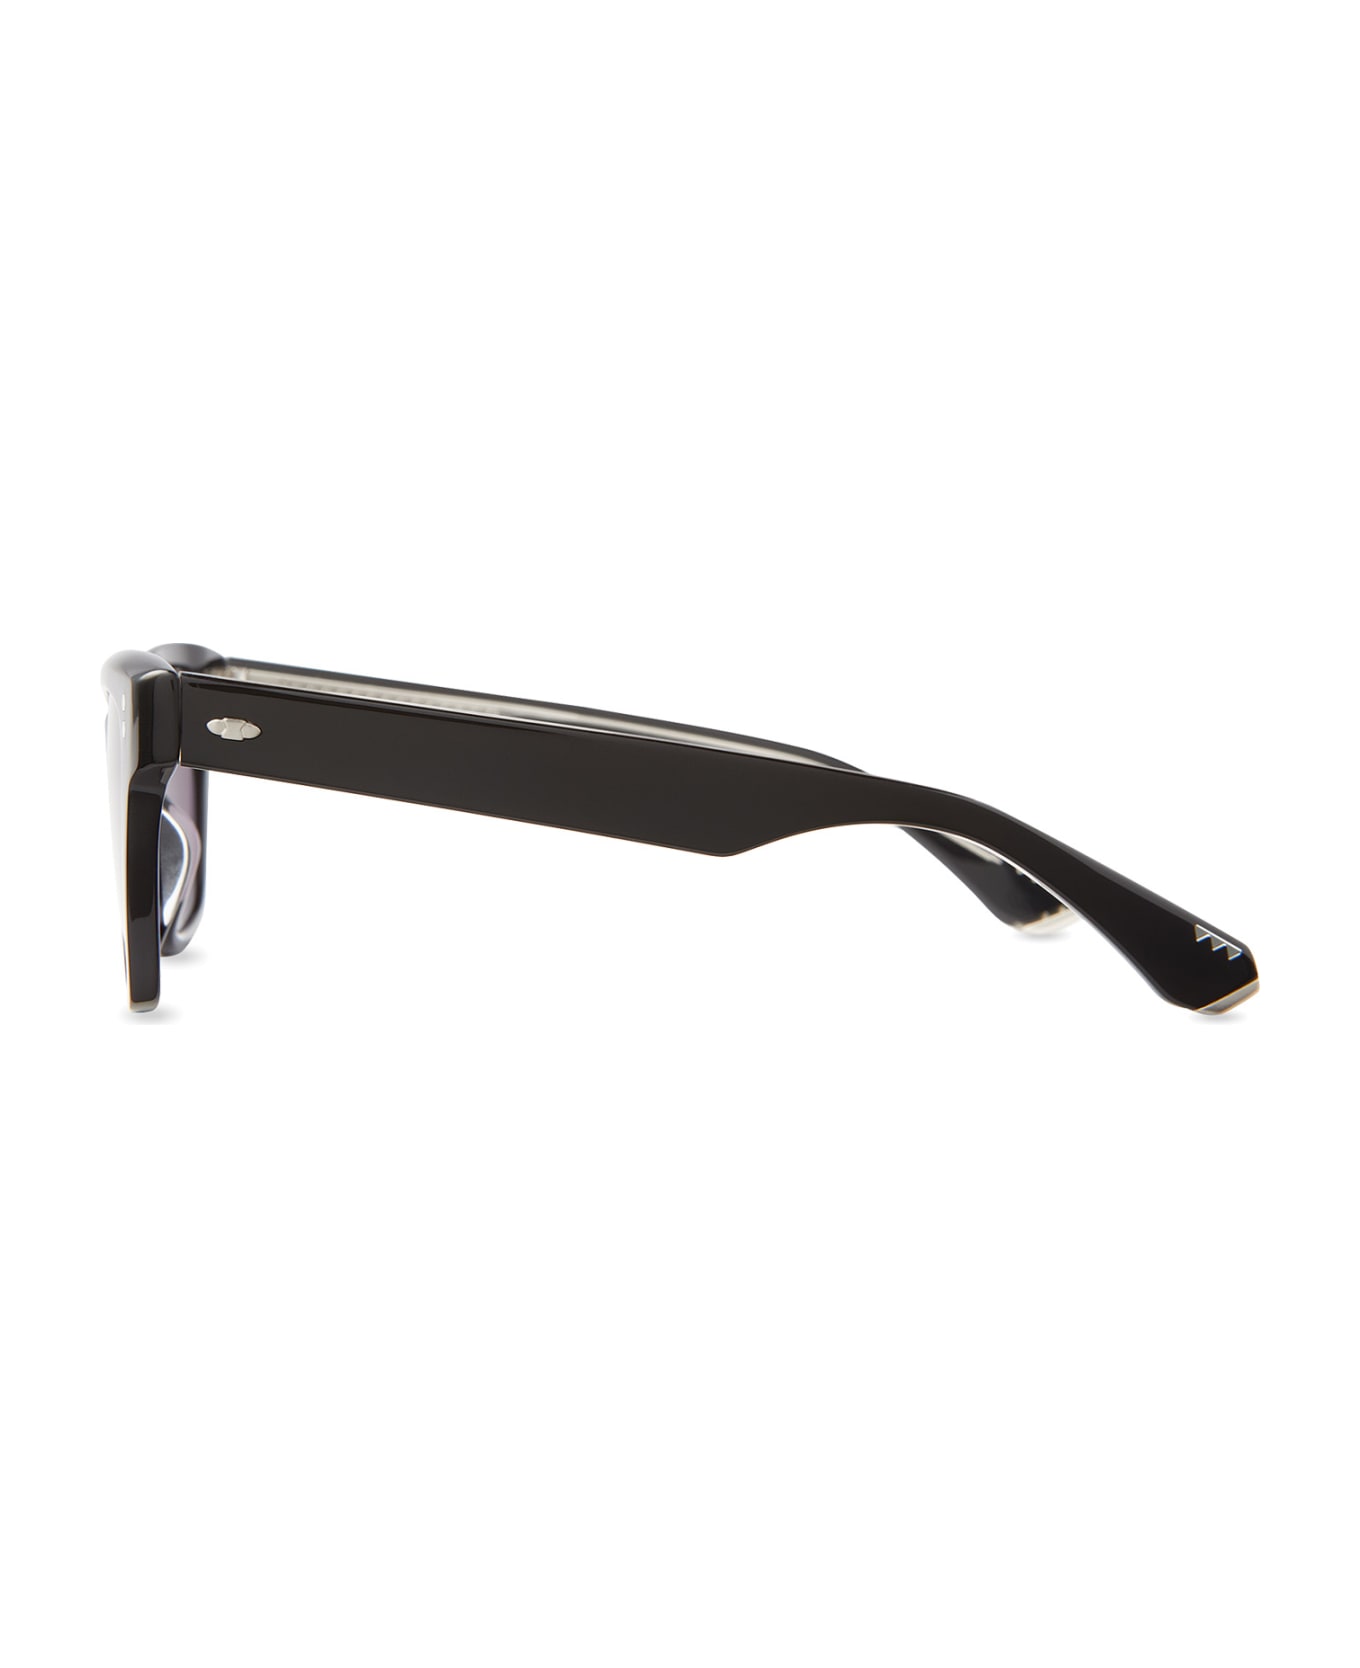 Mr. Leight Lola S Black-platinum Sunglasses - Black-Platinum サングラス